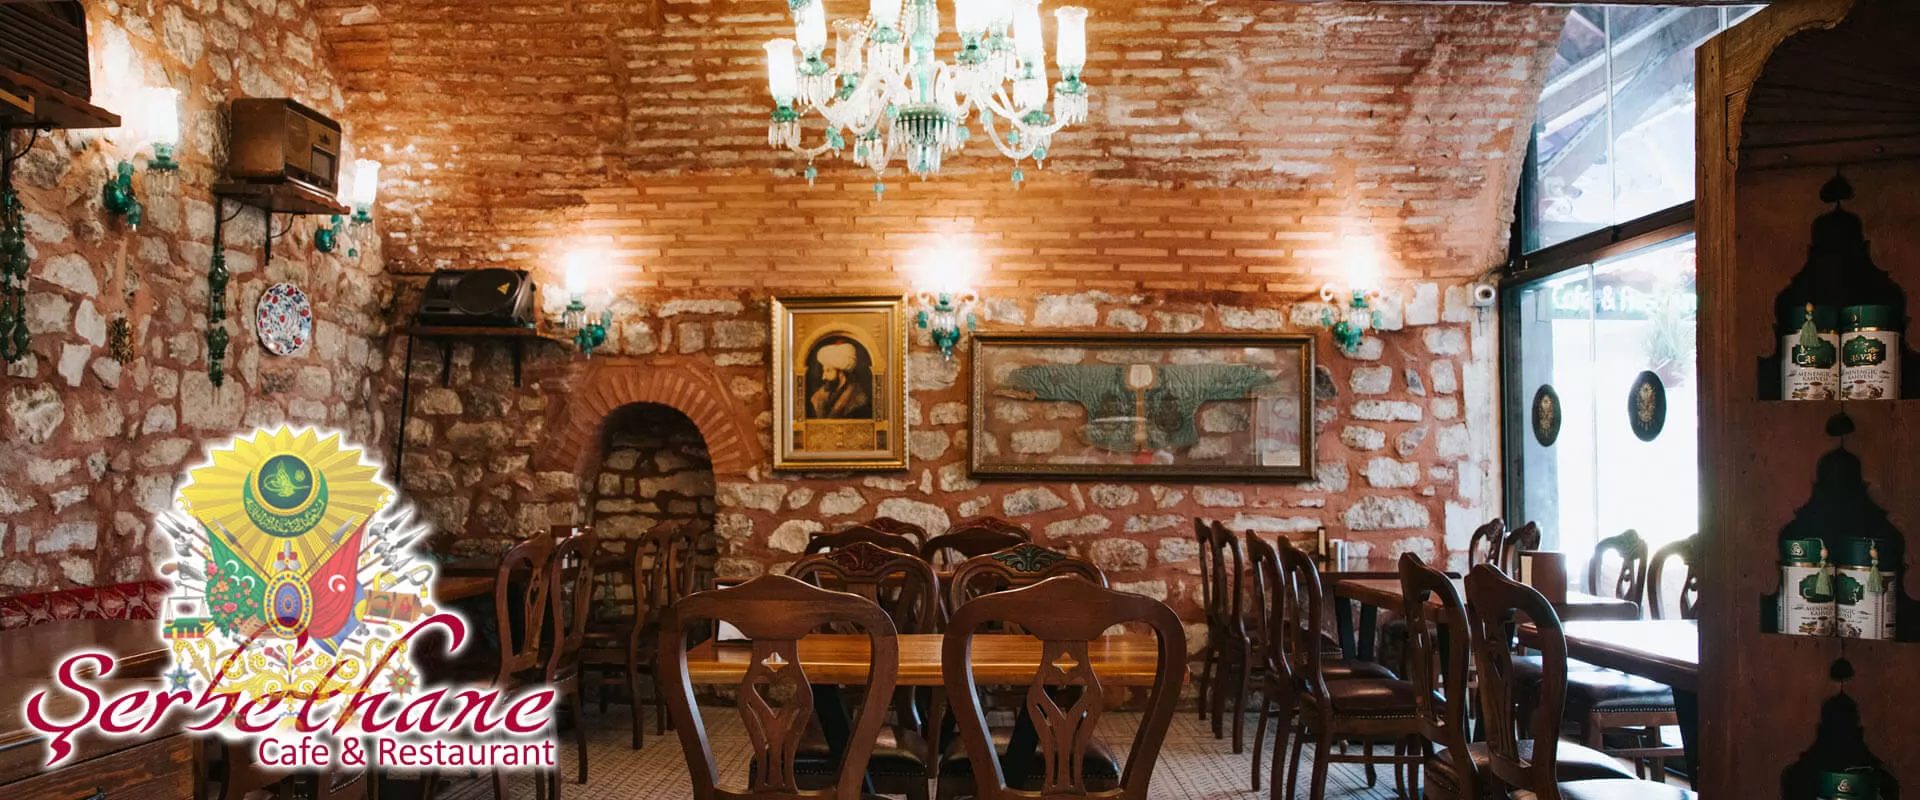 Şerbethane Cafe & Restaurant #8